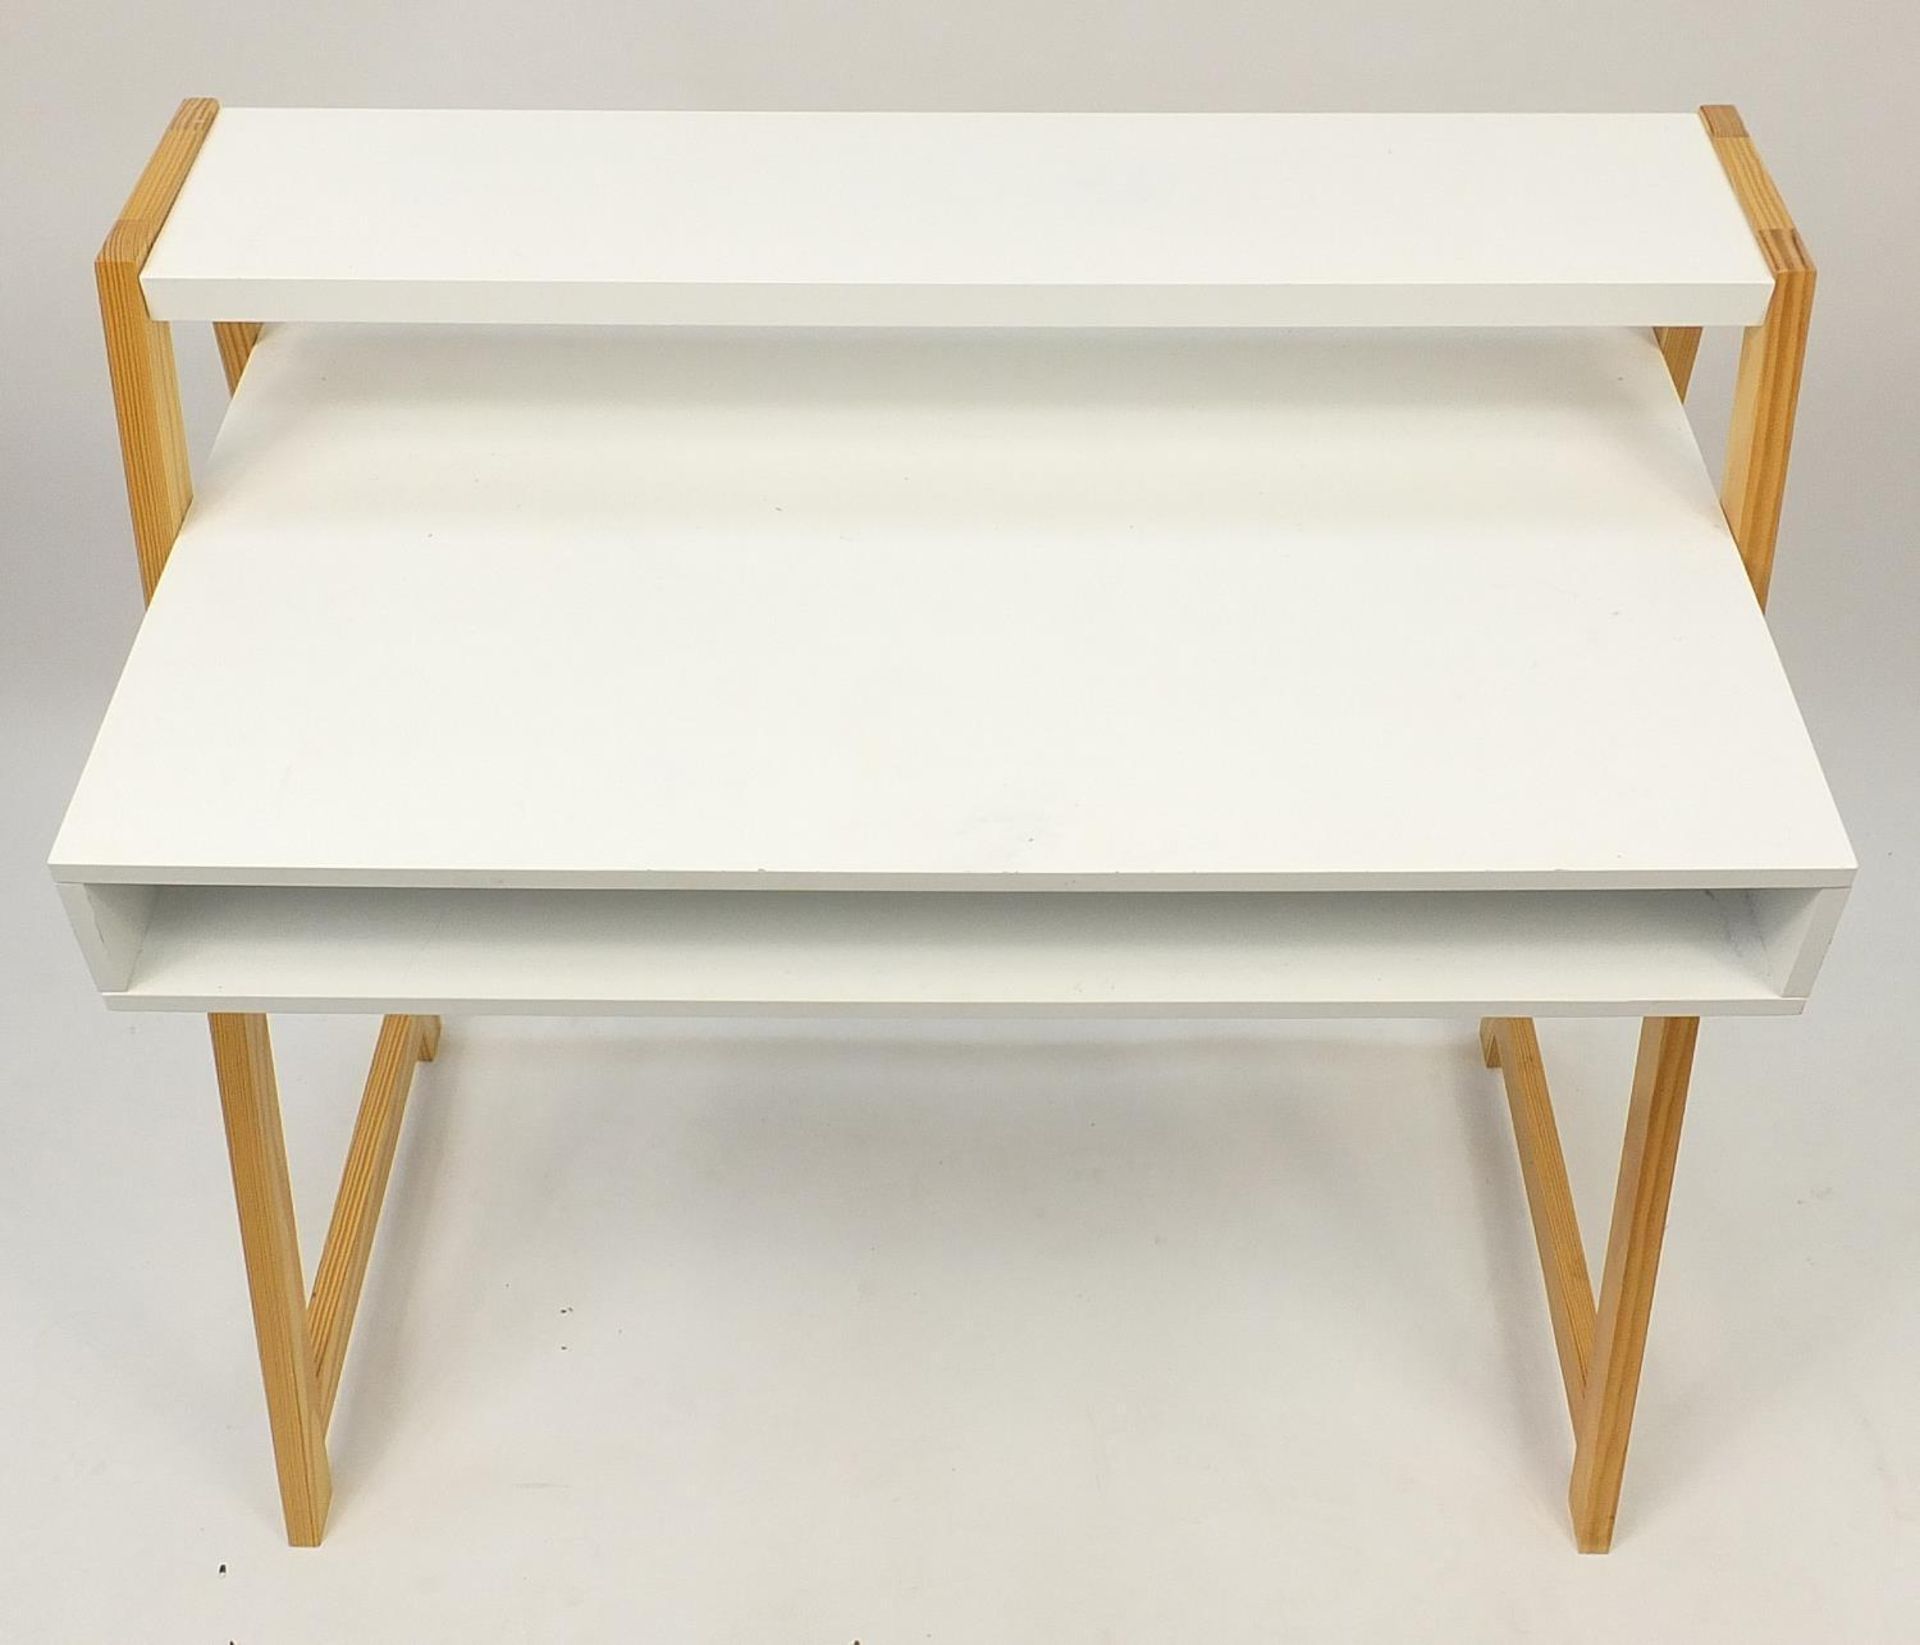 Contemporary light wood and melamine desk, 92.5cm H x 100cm W x 52cm D - Image 3 of 4